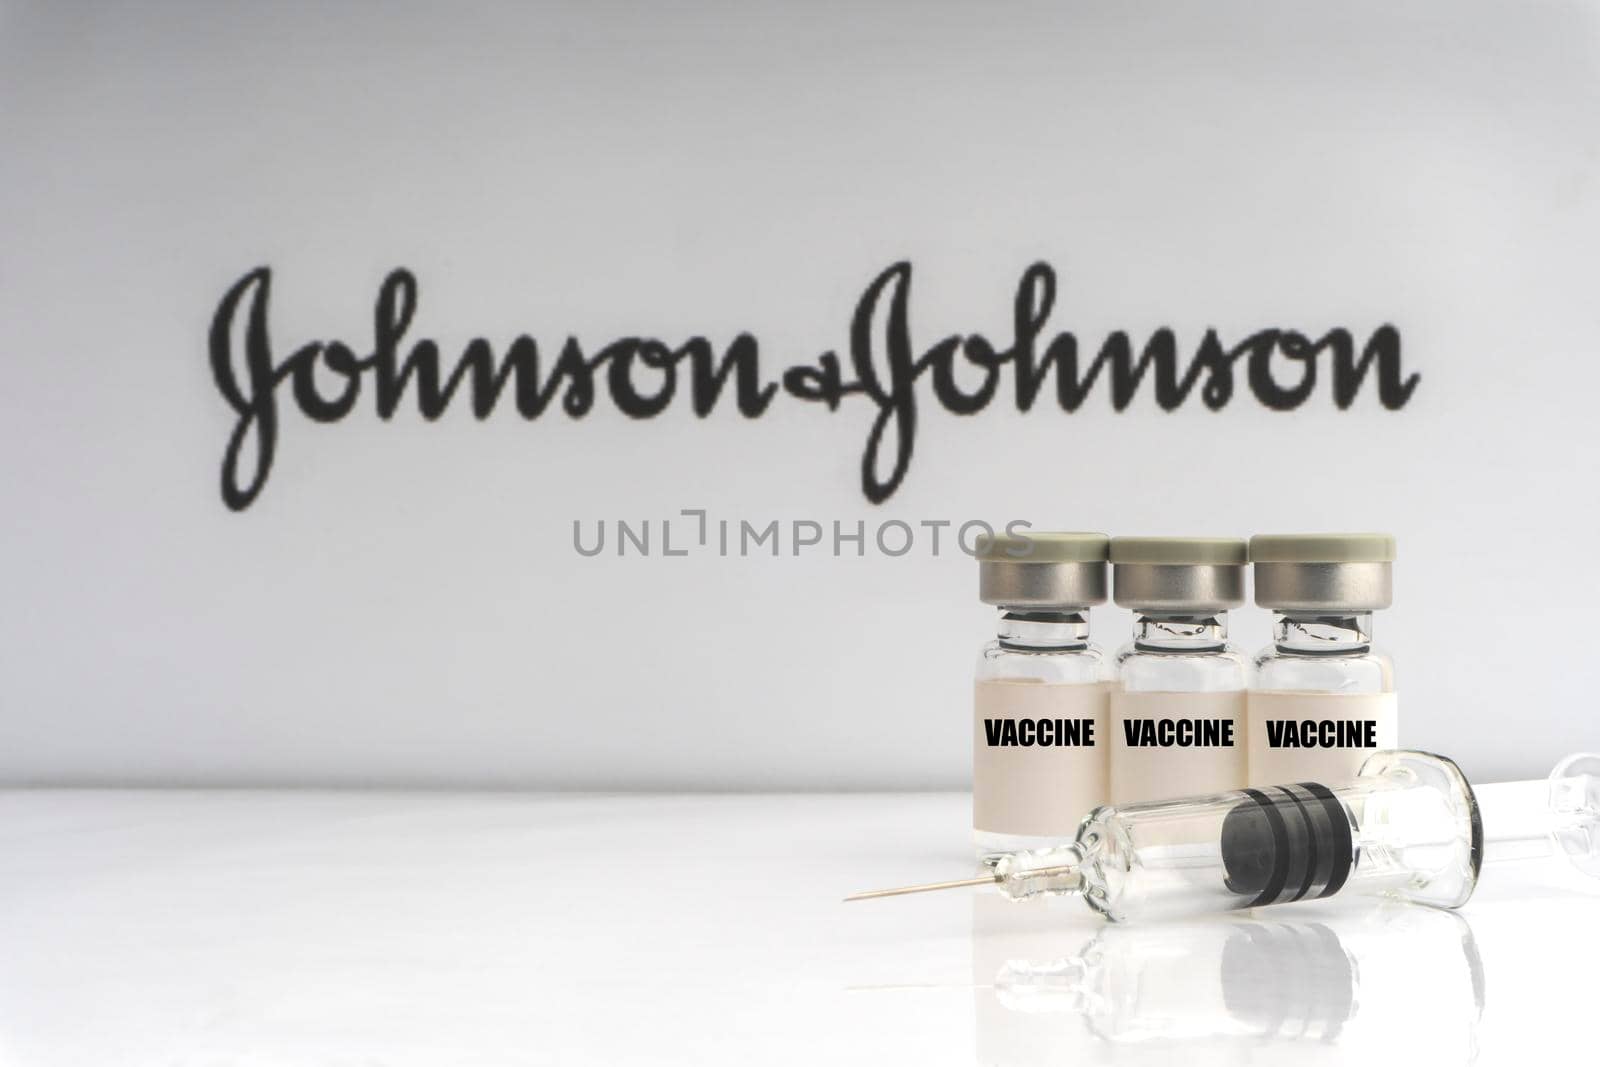 Kuala Lumpur, Malaysia - Mac 2, 2021: Vials vaccine and syringe on blurry Johnson & Johnson background by silverwings